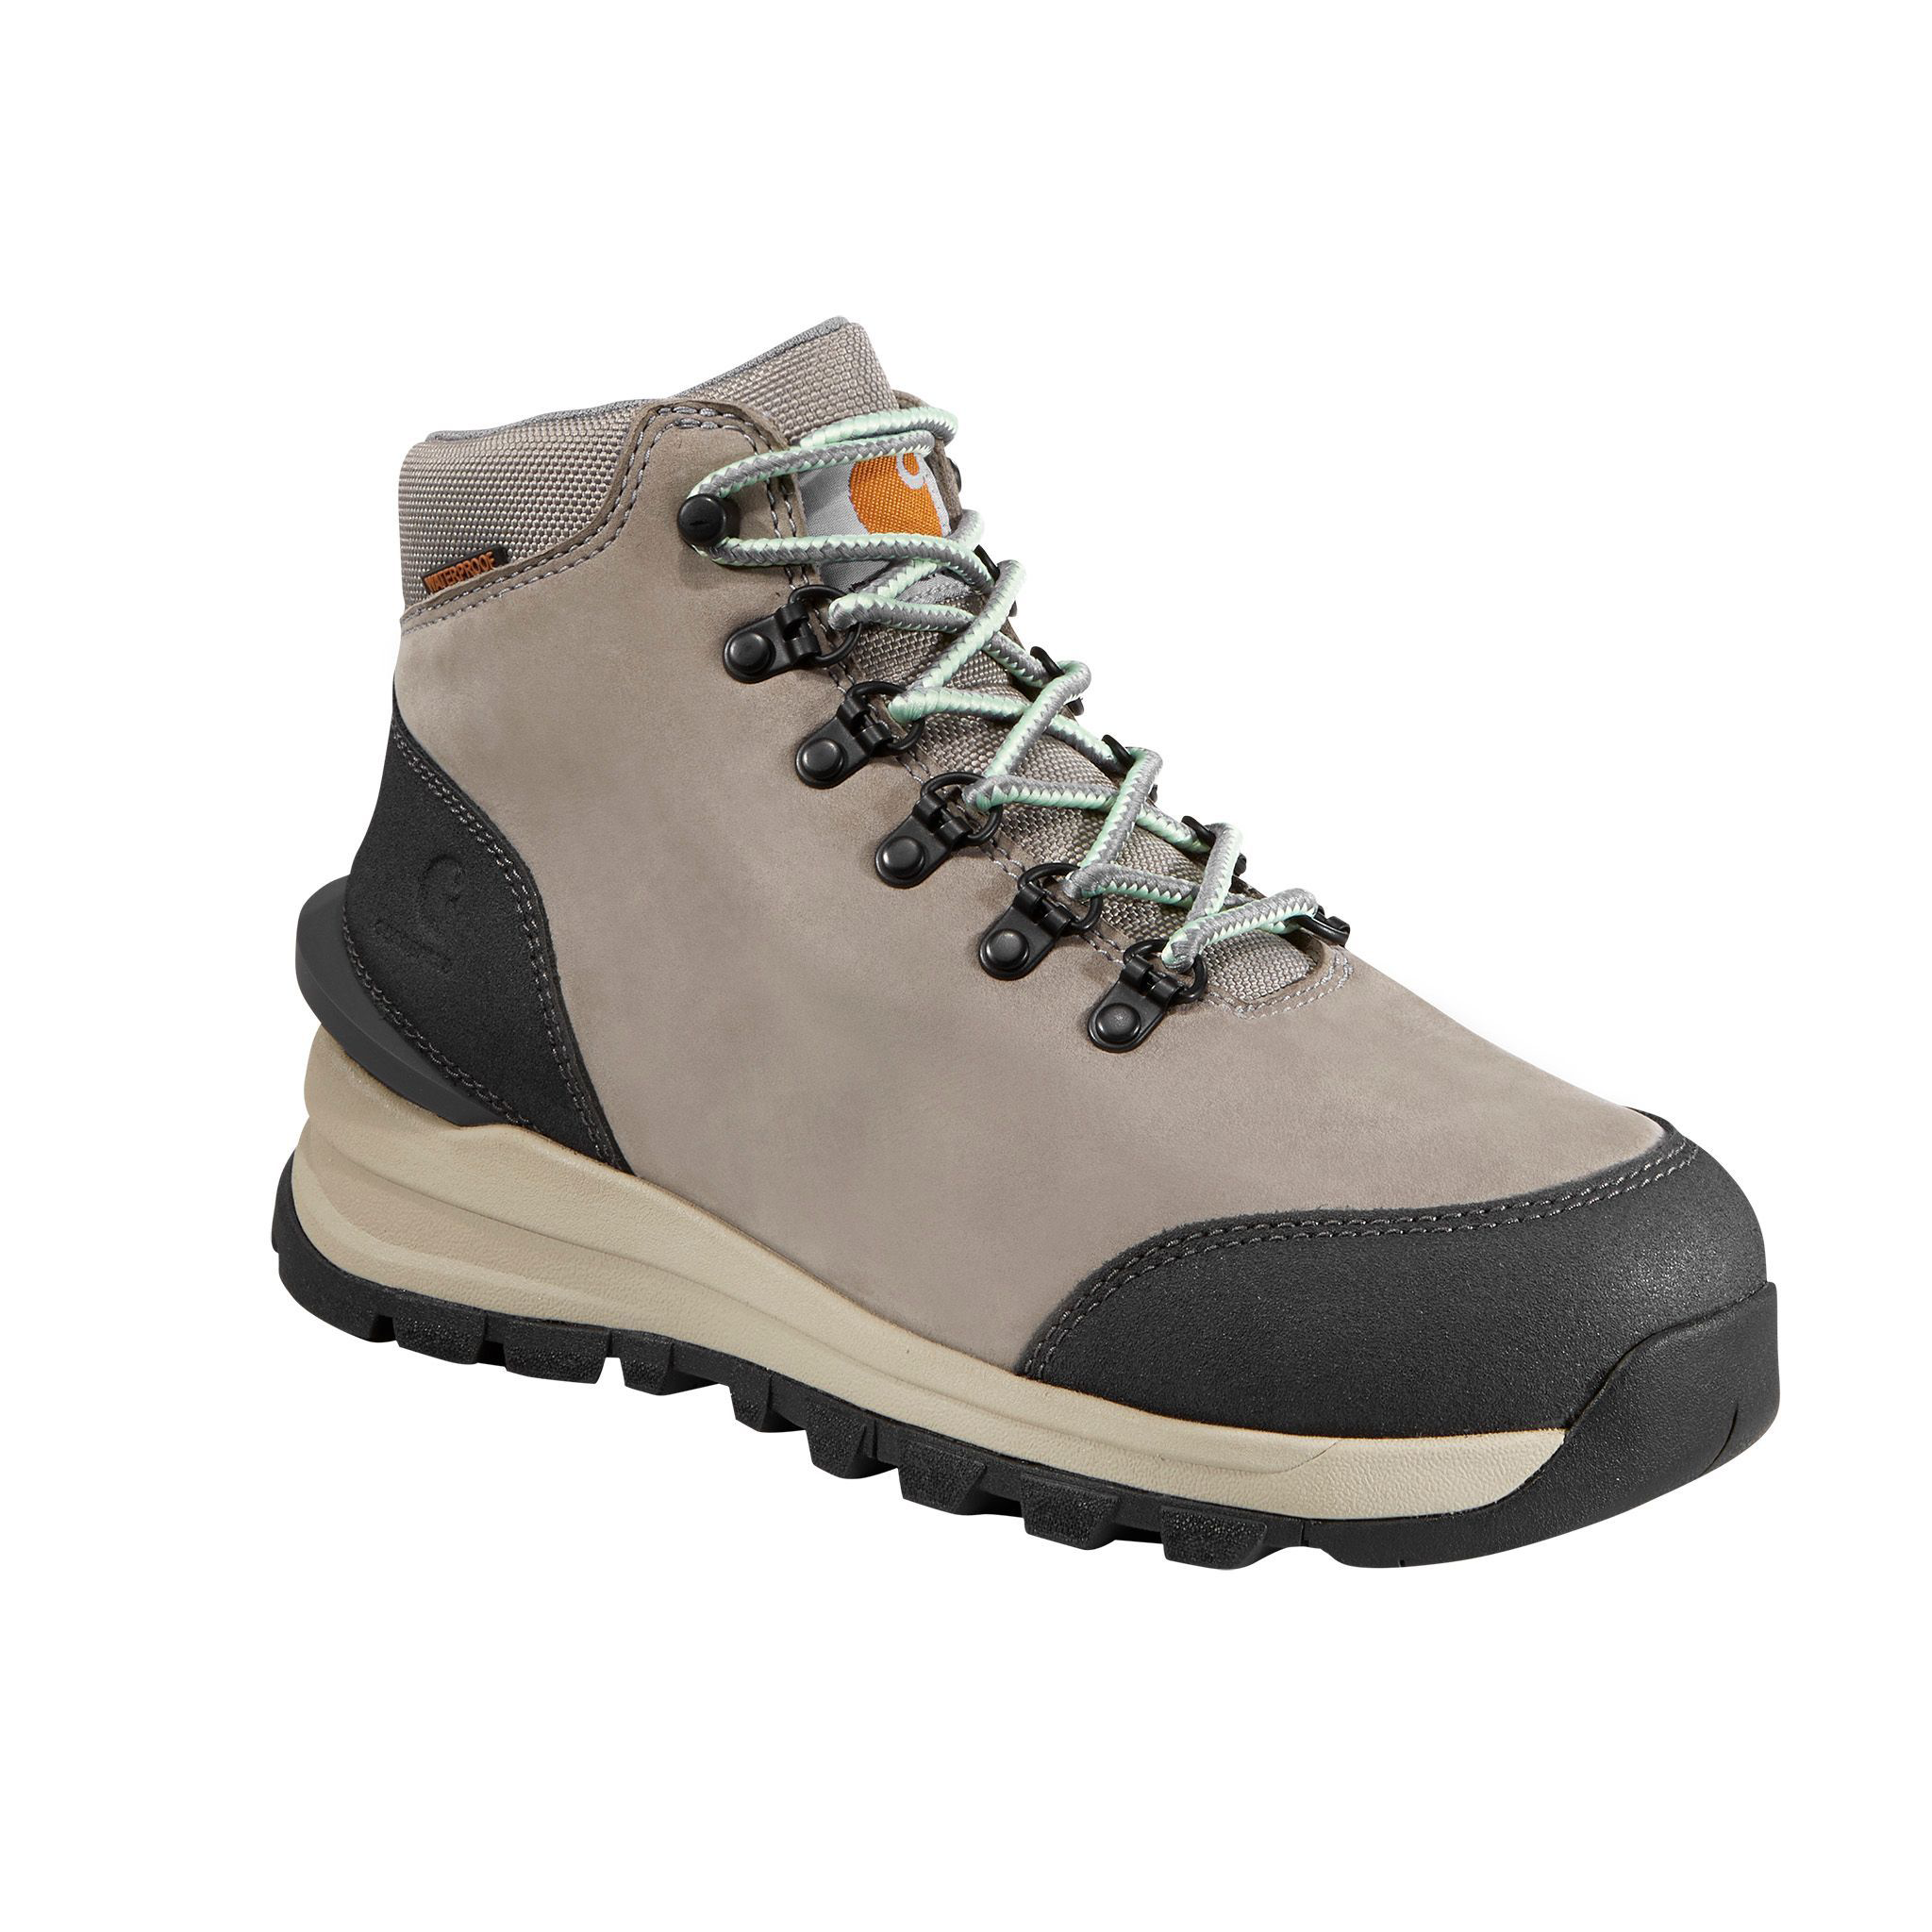 Carhartt Gilmore Waterproof Hiking Boots for Ladies - Grey Nubuck - 9.5M